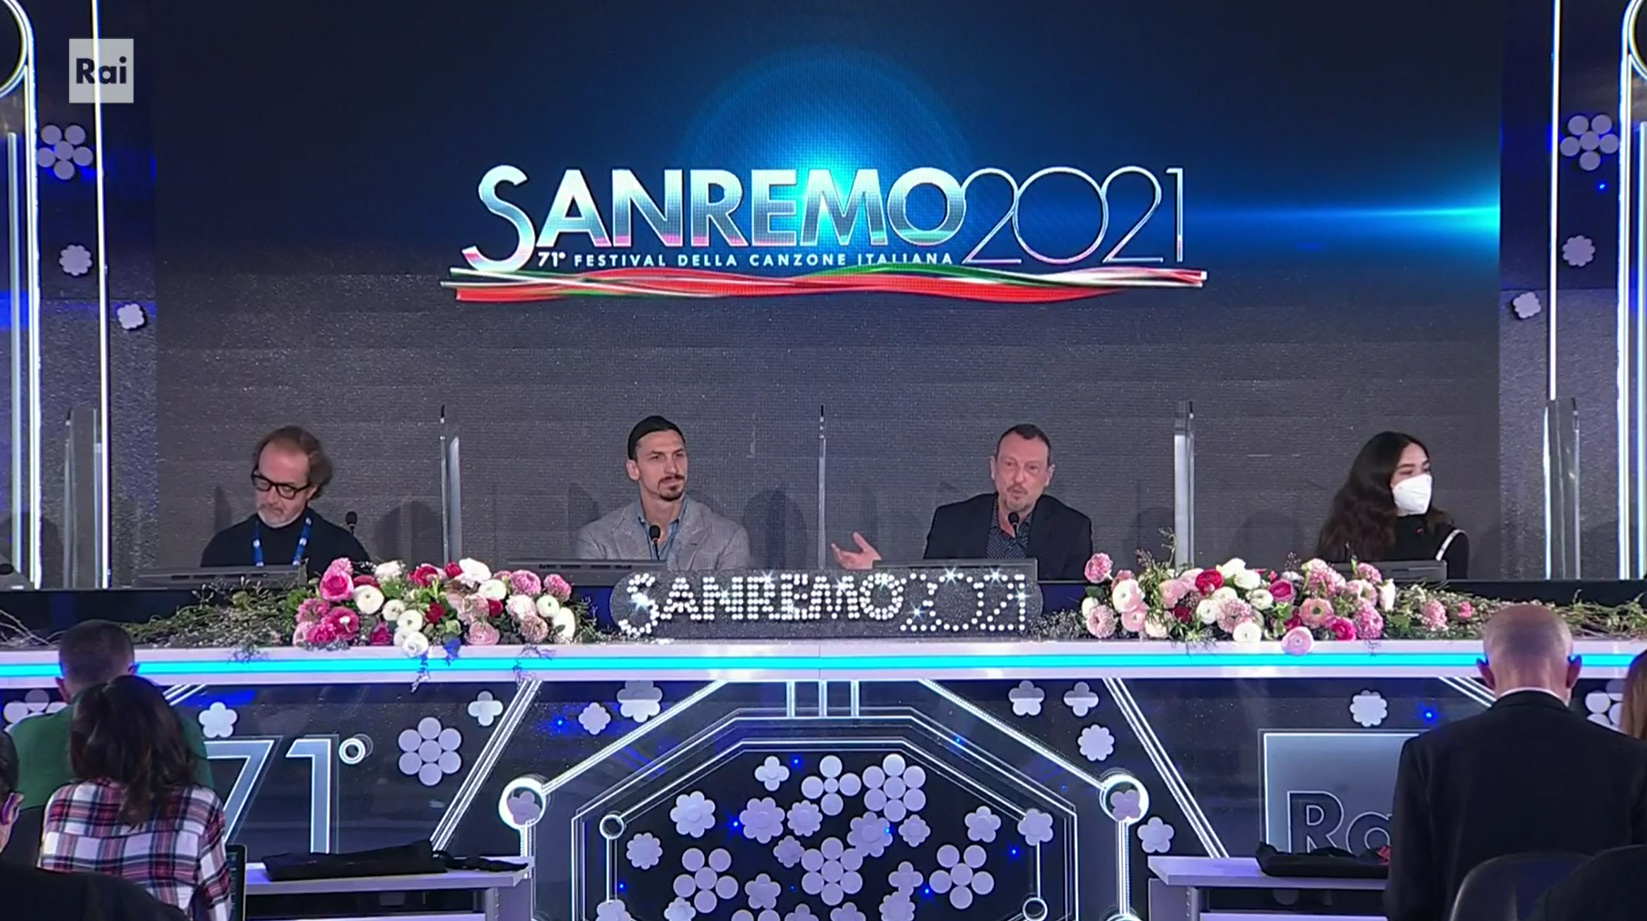 Conferenza stampa di Sanremo 2021 (2 marzo 2021) [credit: RaiPlay]